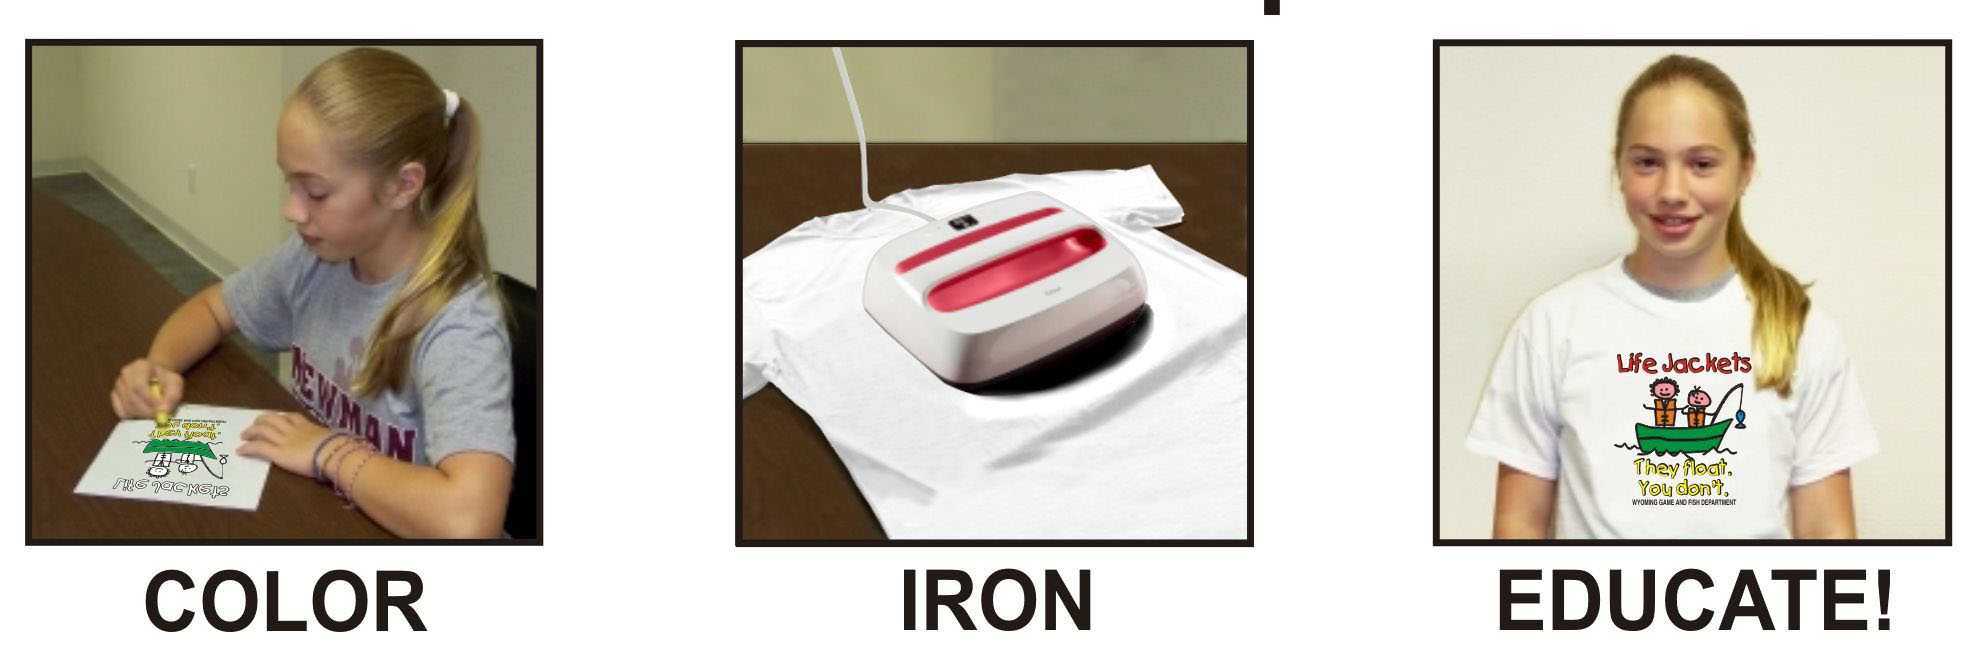 Color Iron Educate